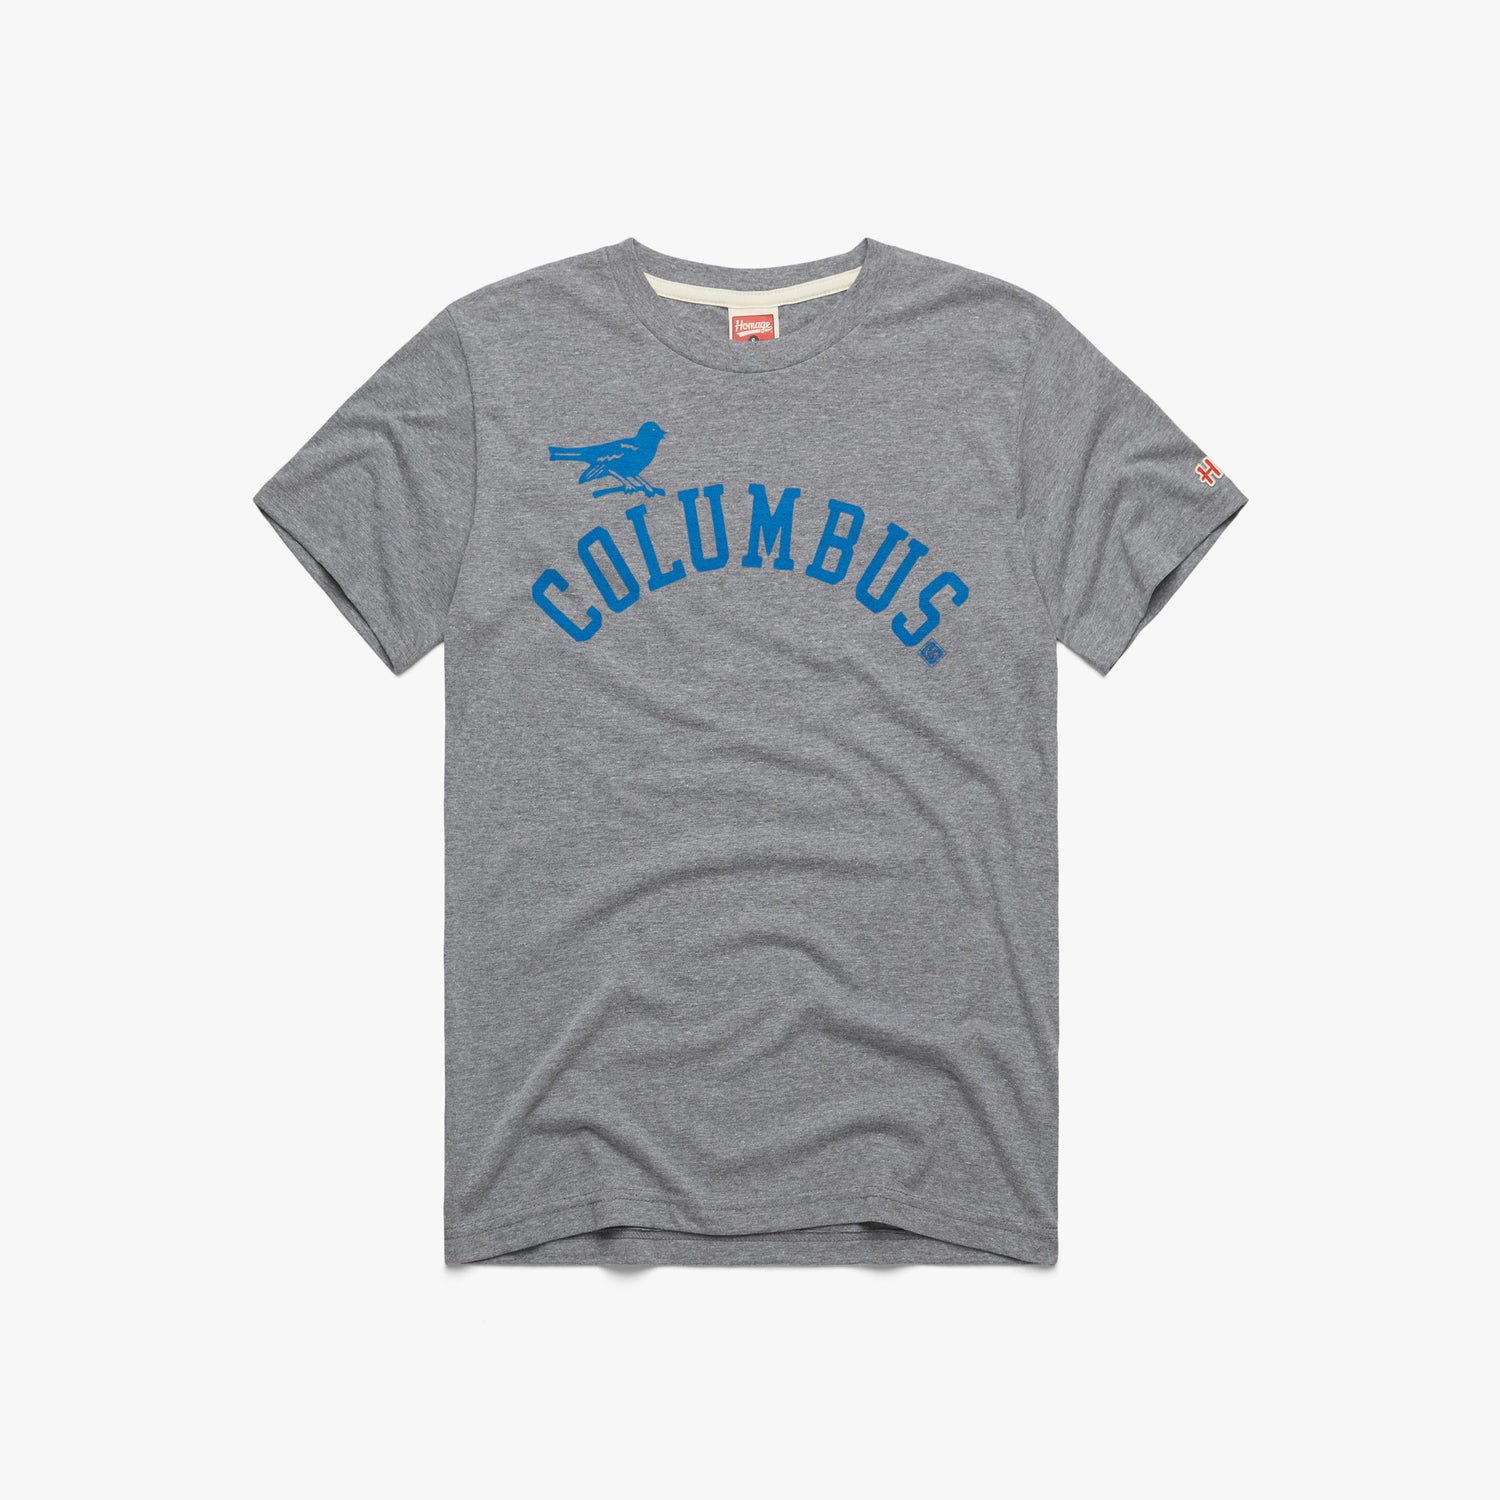 Columbia, Shirts, Columbia Blue Shirt Houston Astros World Series 27  Large